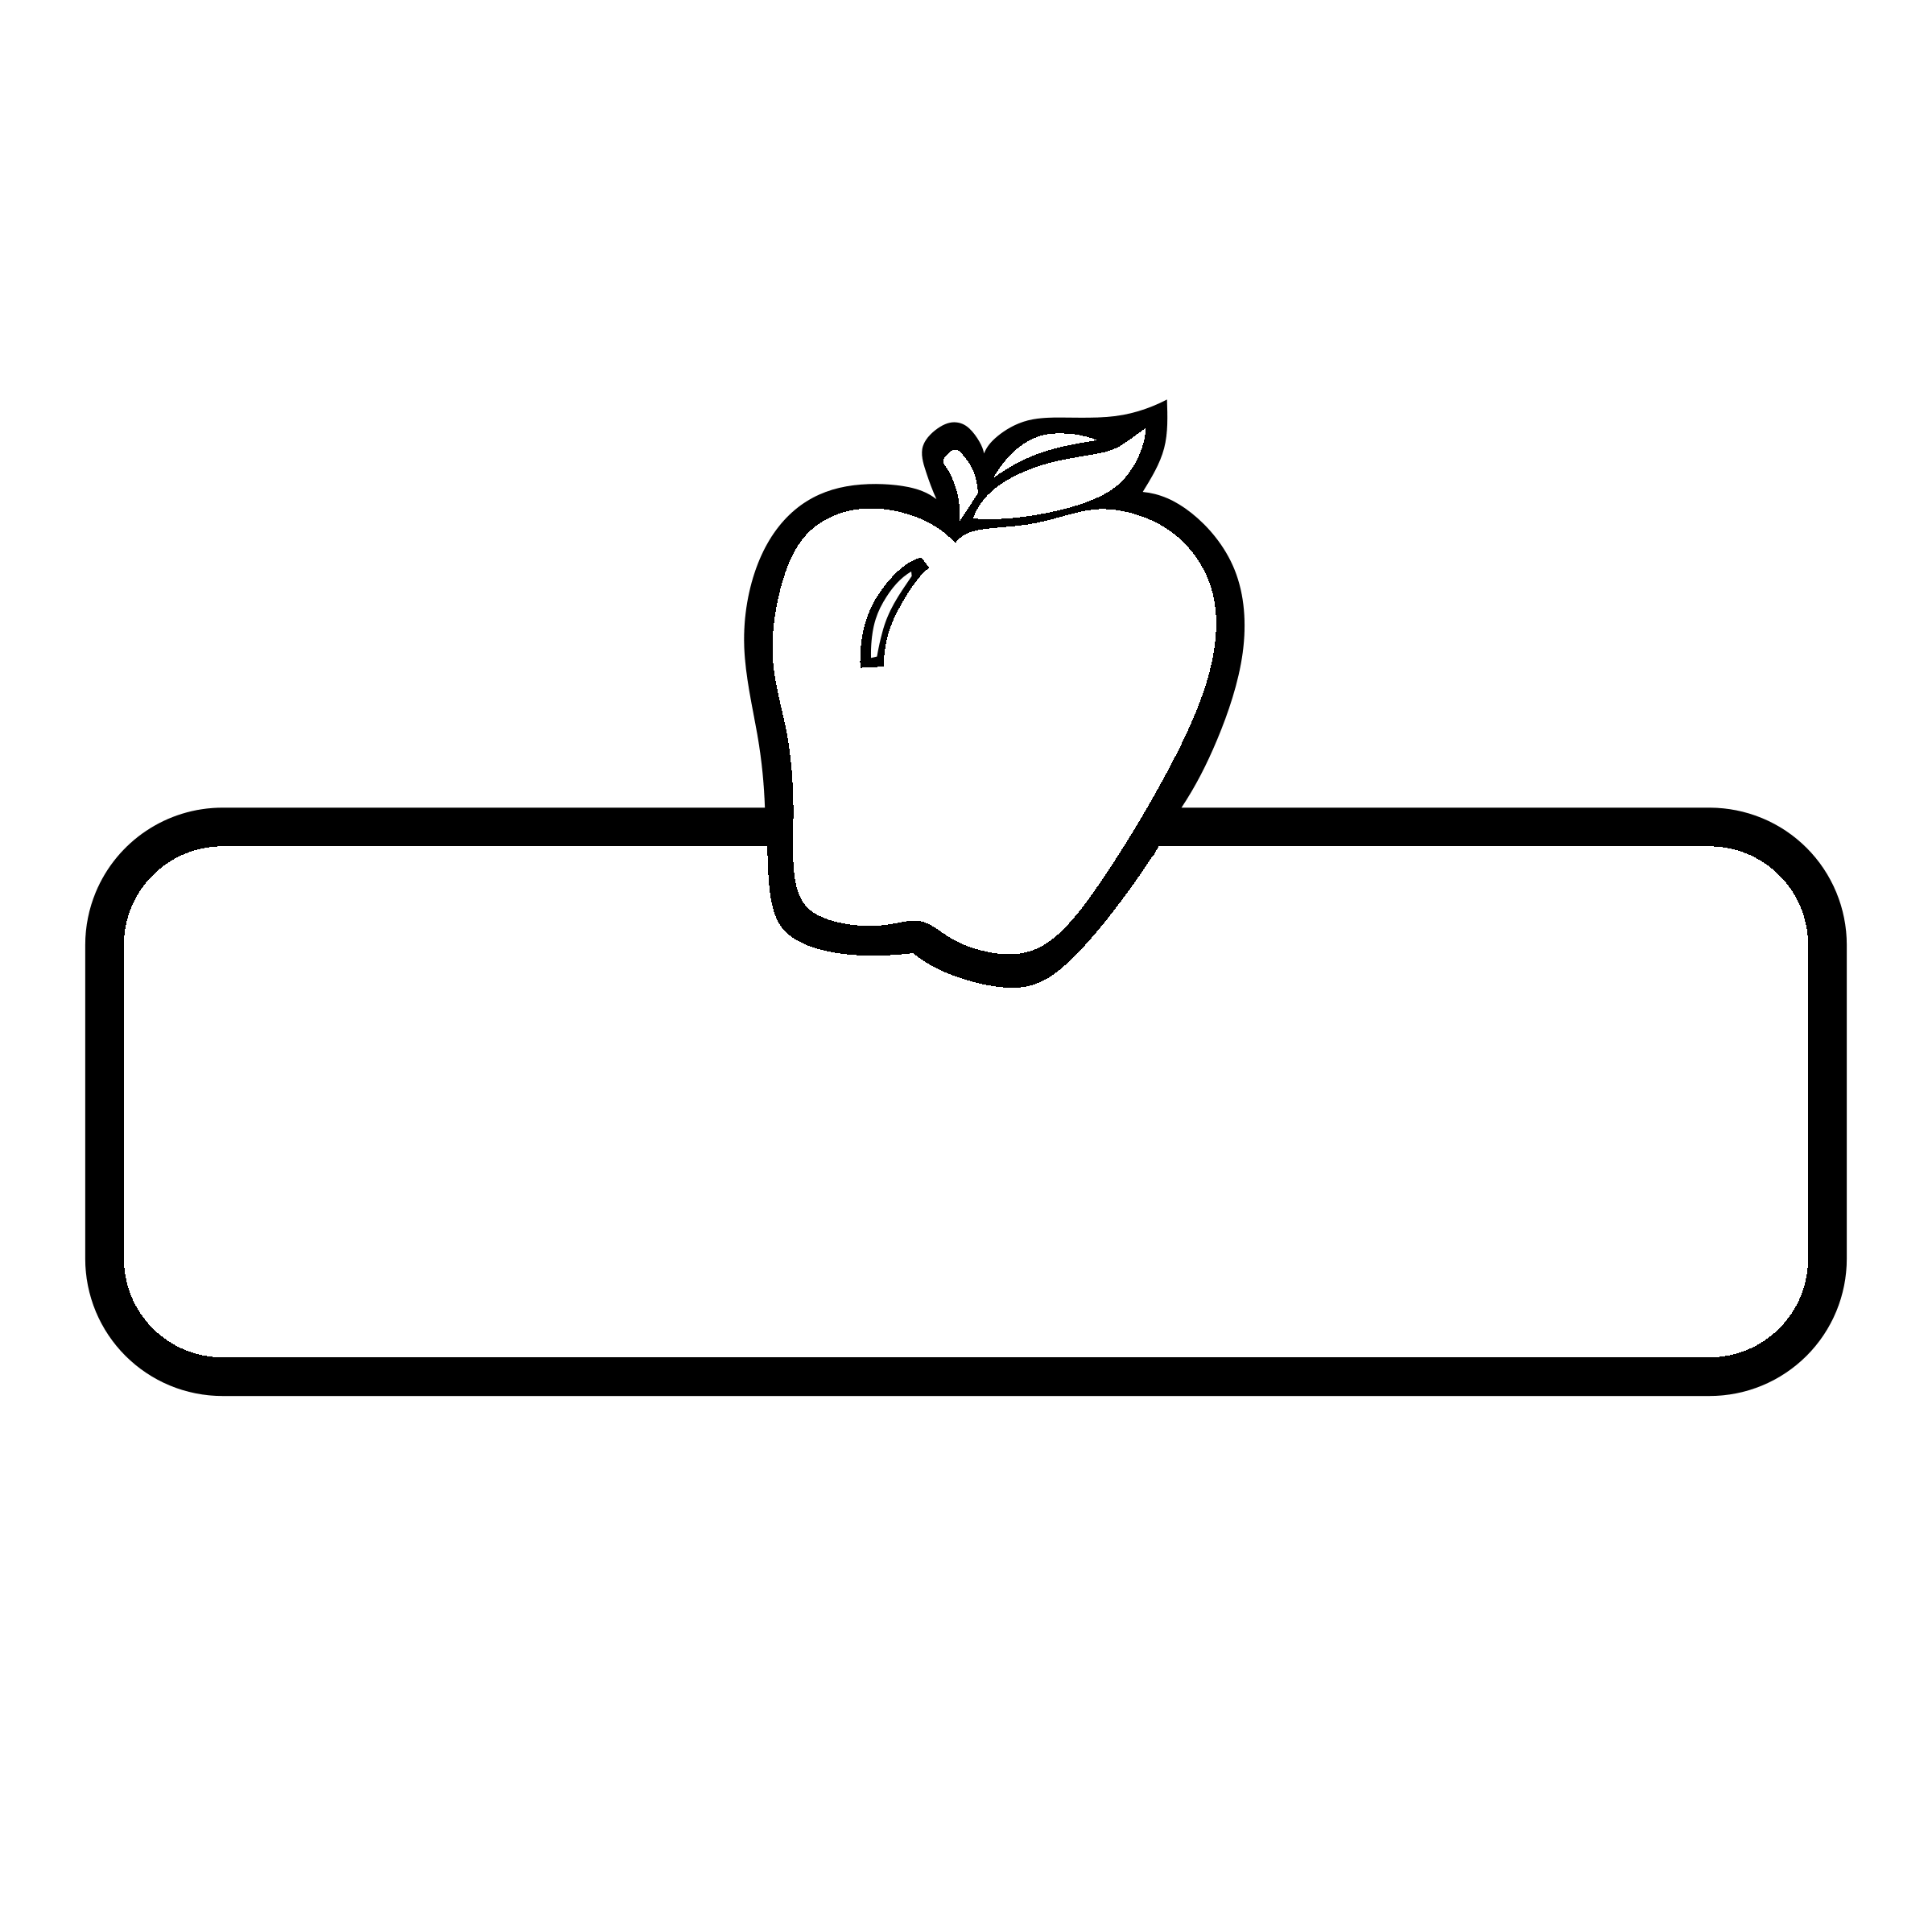 Applebees Logo - Applebee's Logo PNG Transparent & SVG Vector - Freebie Supply